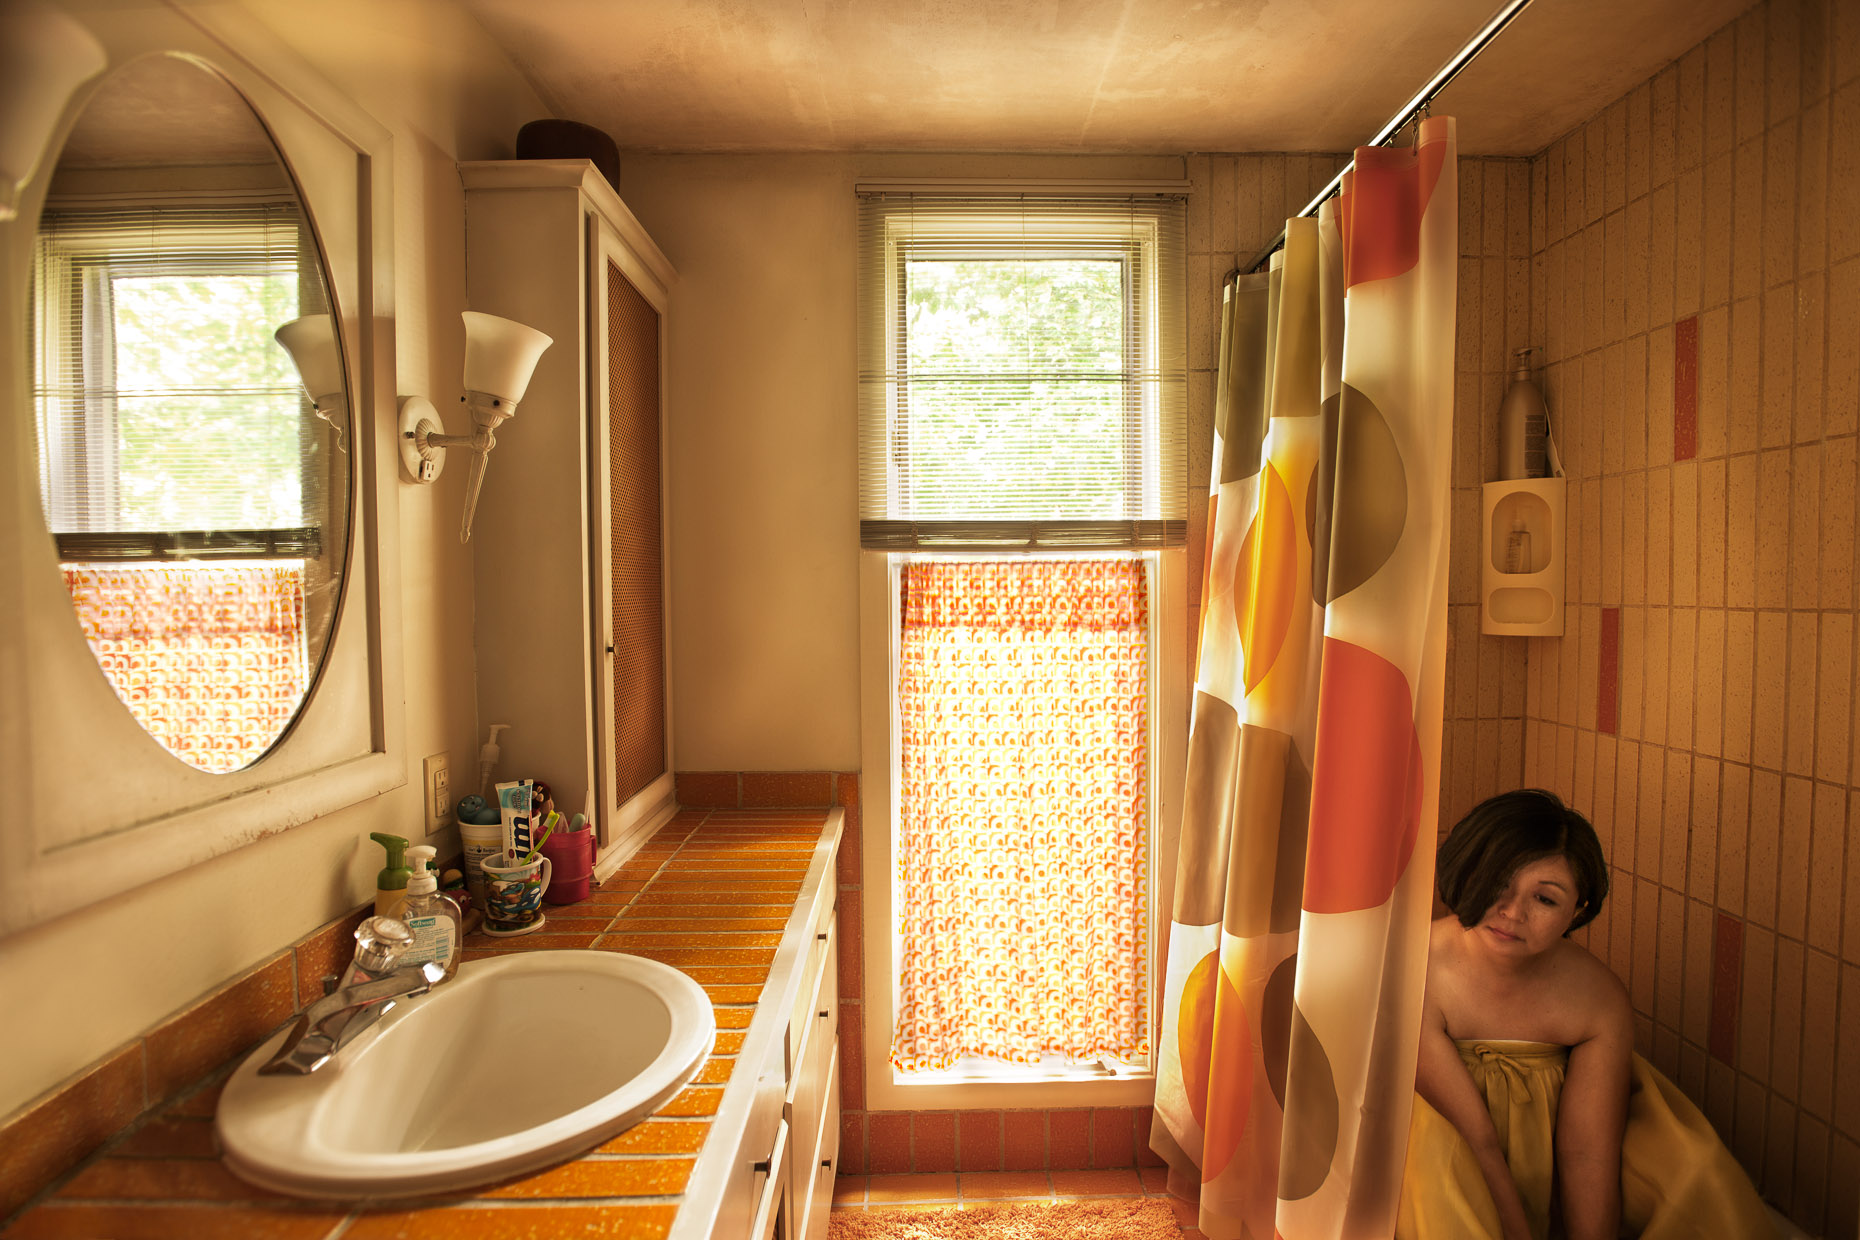 portraits-project-housewife-woman-orange-bathtub